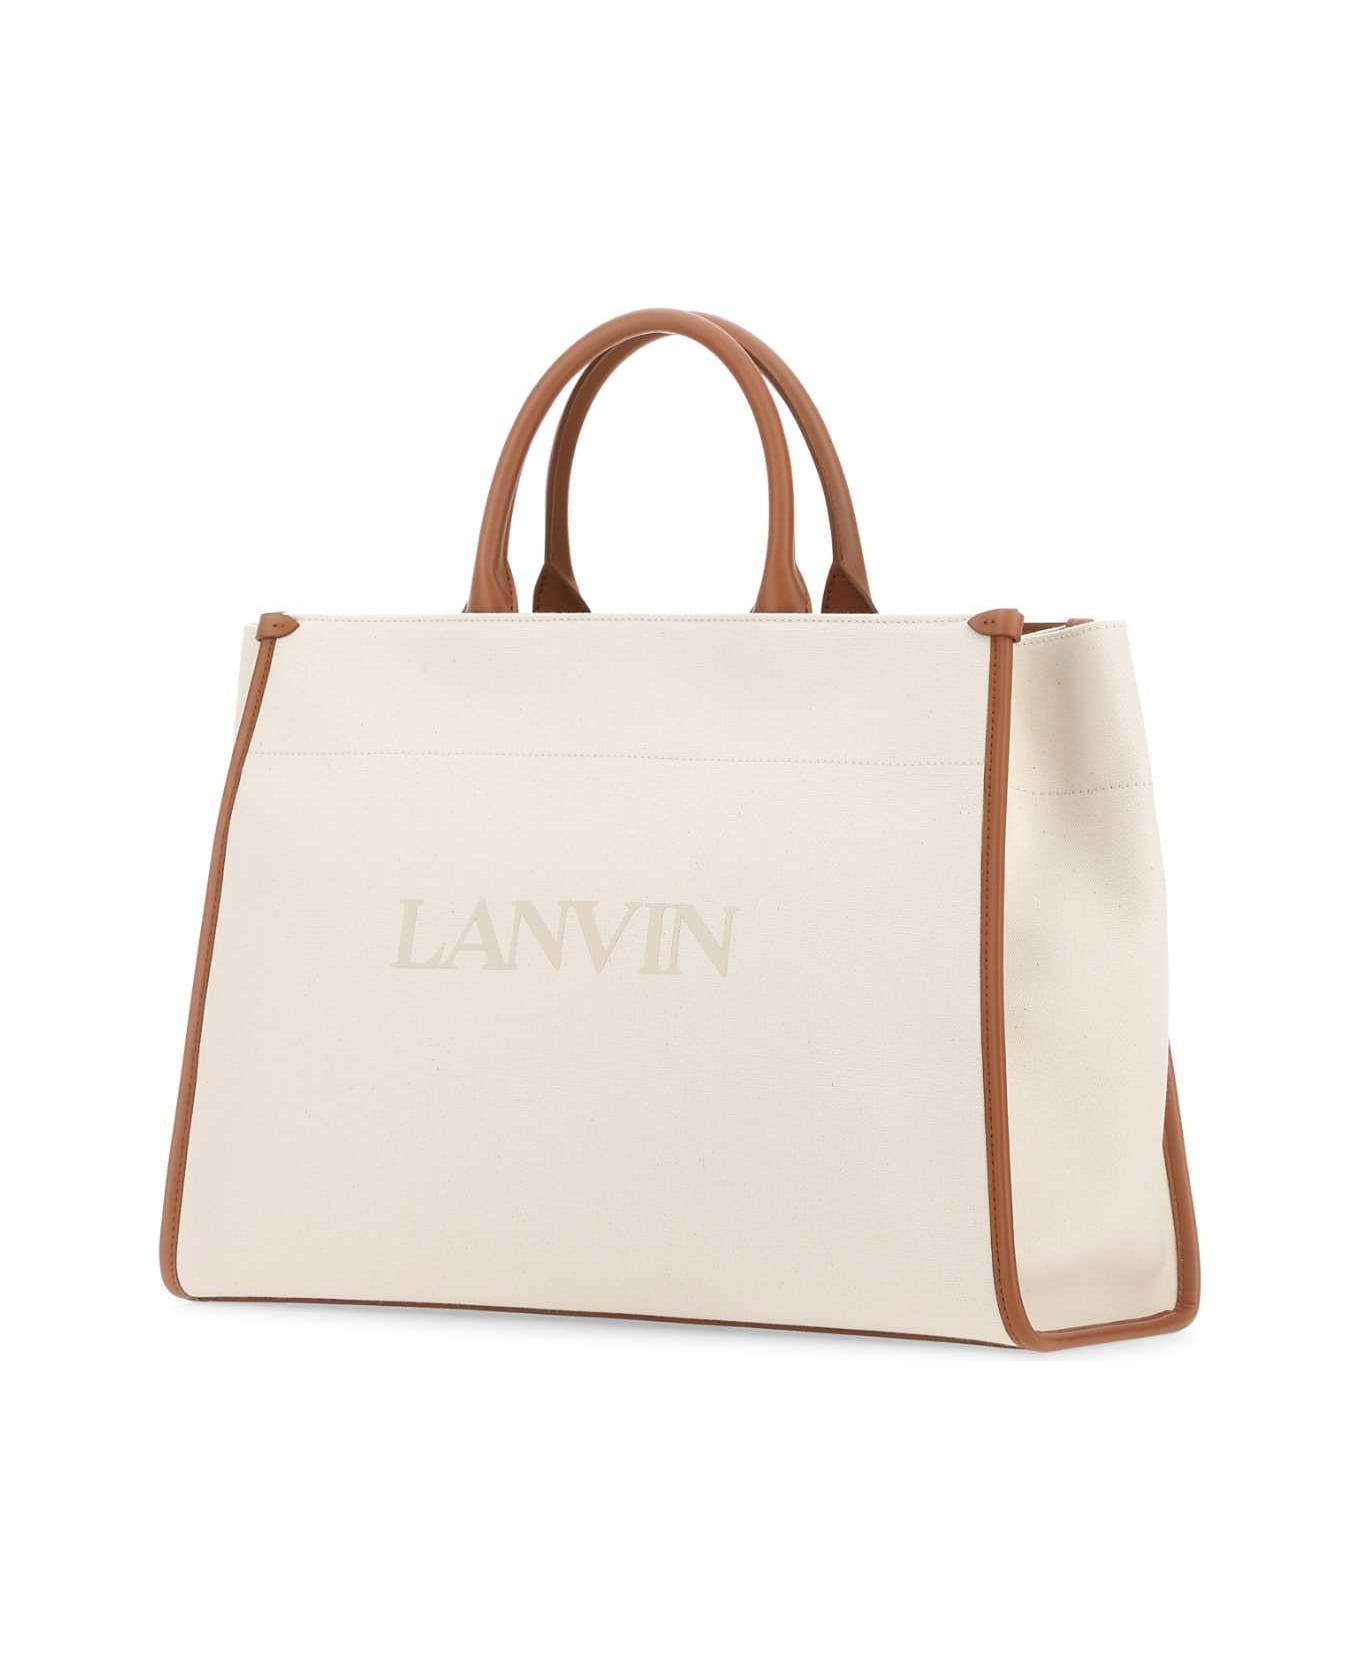 Lanvin Sand Canvas Shopping Bag - White トートバッグ